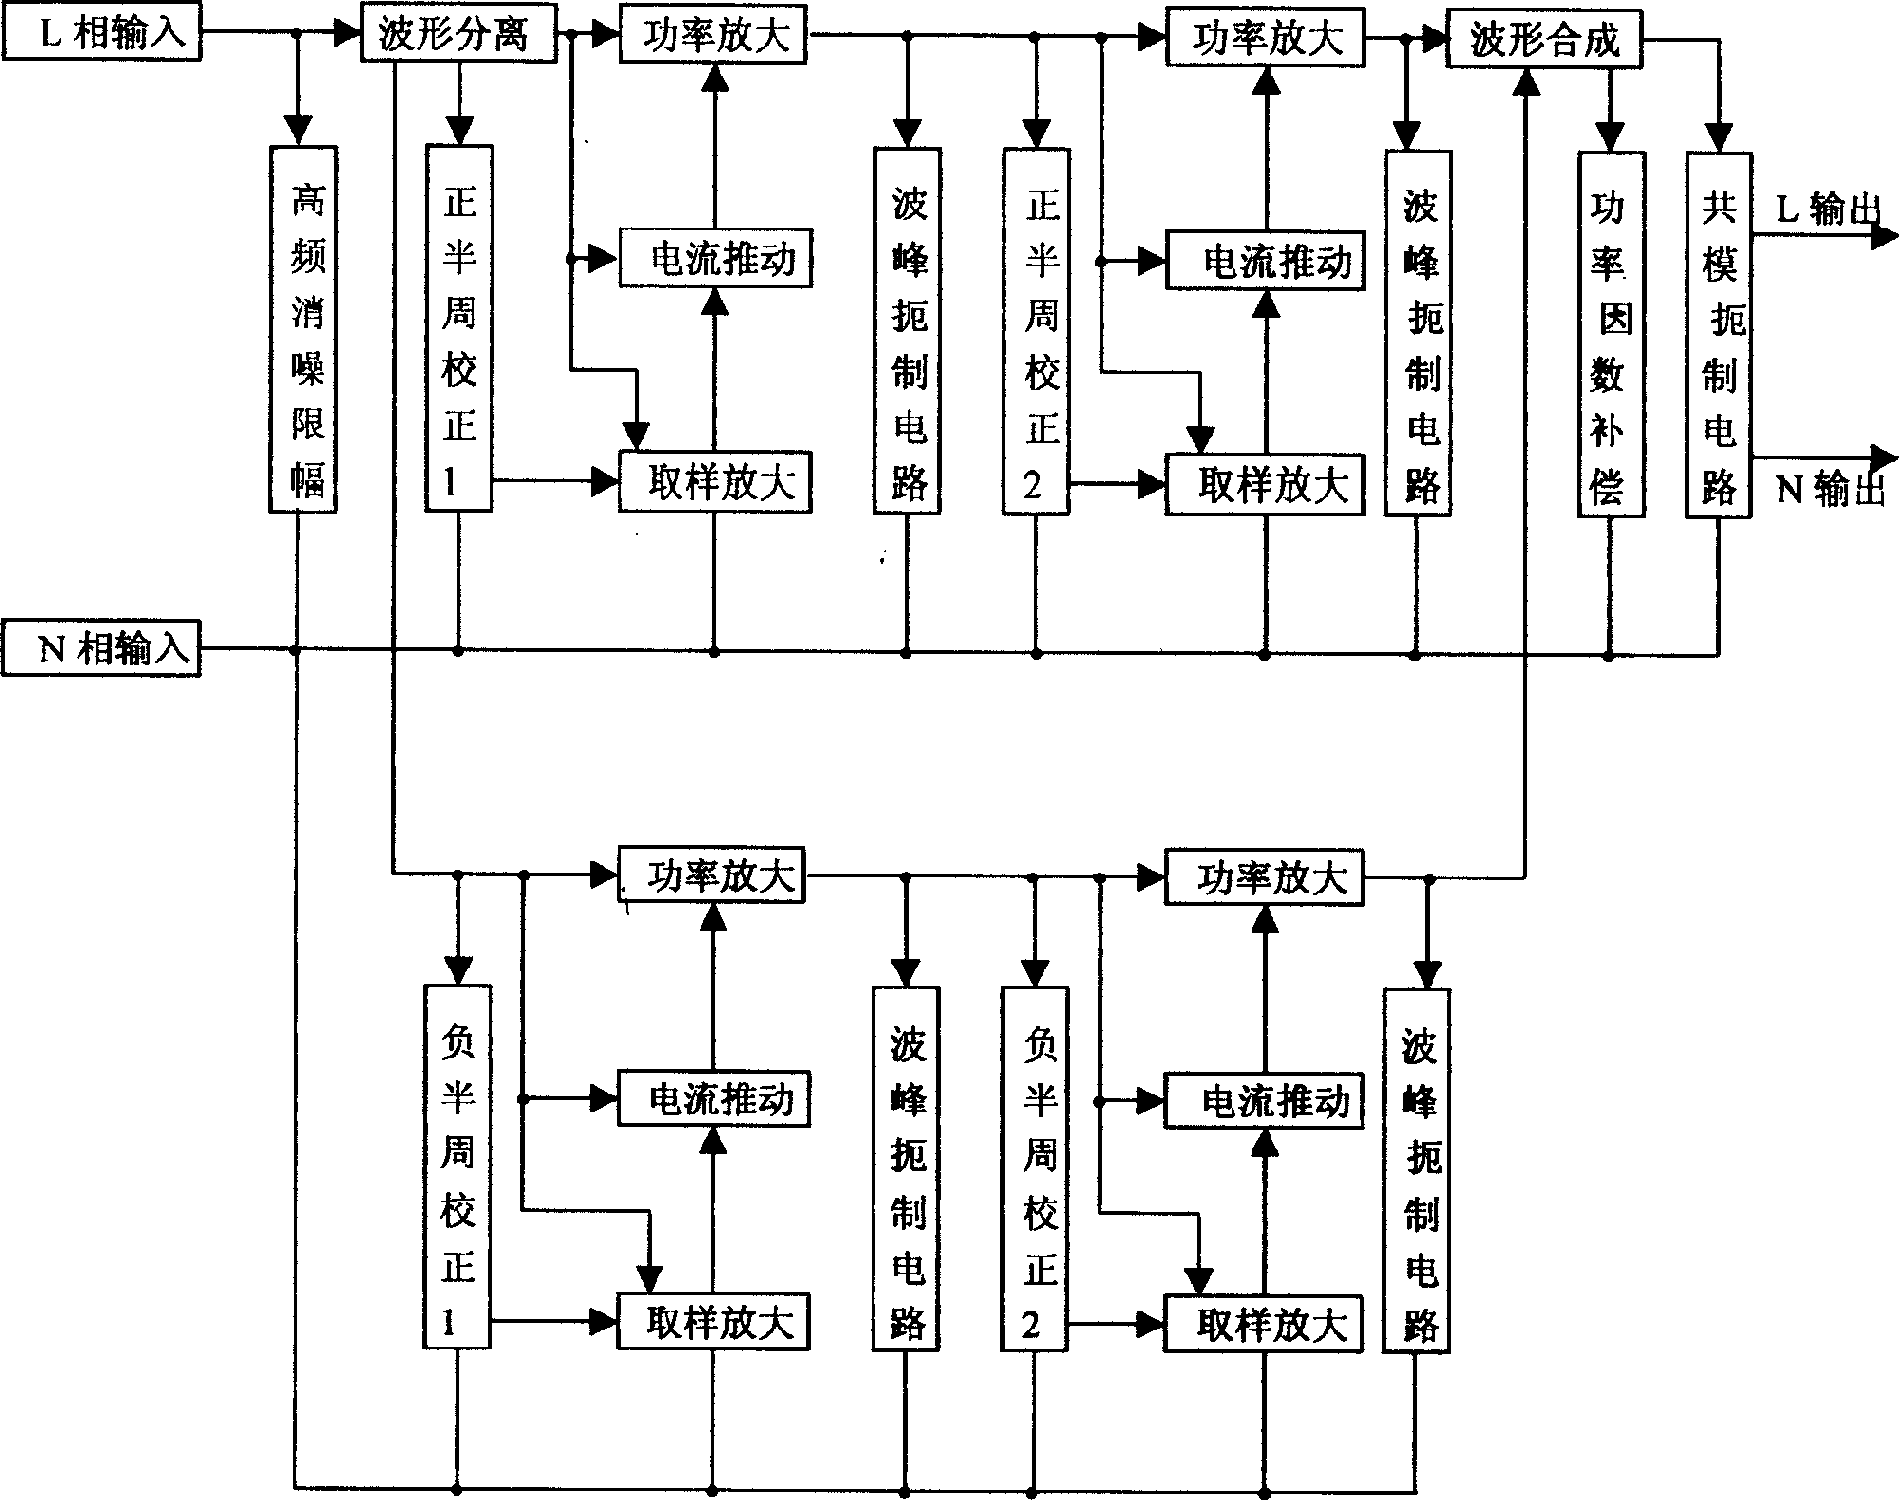 Transistor AC power purifying circuit